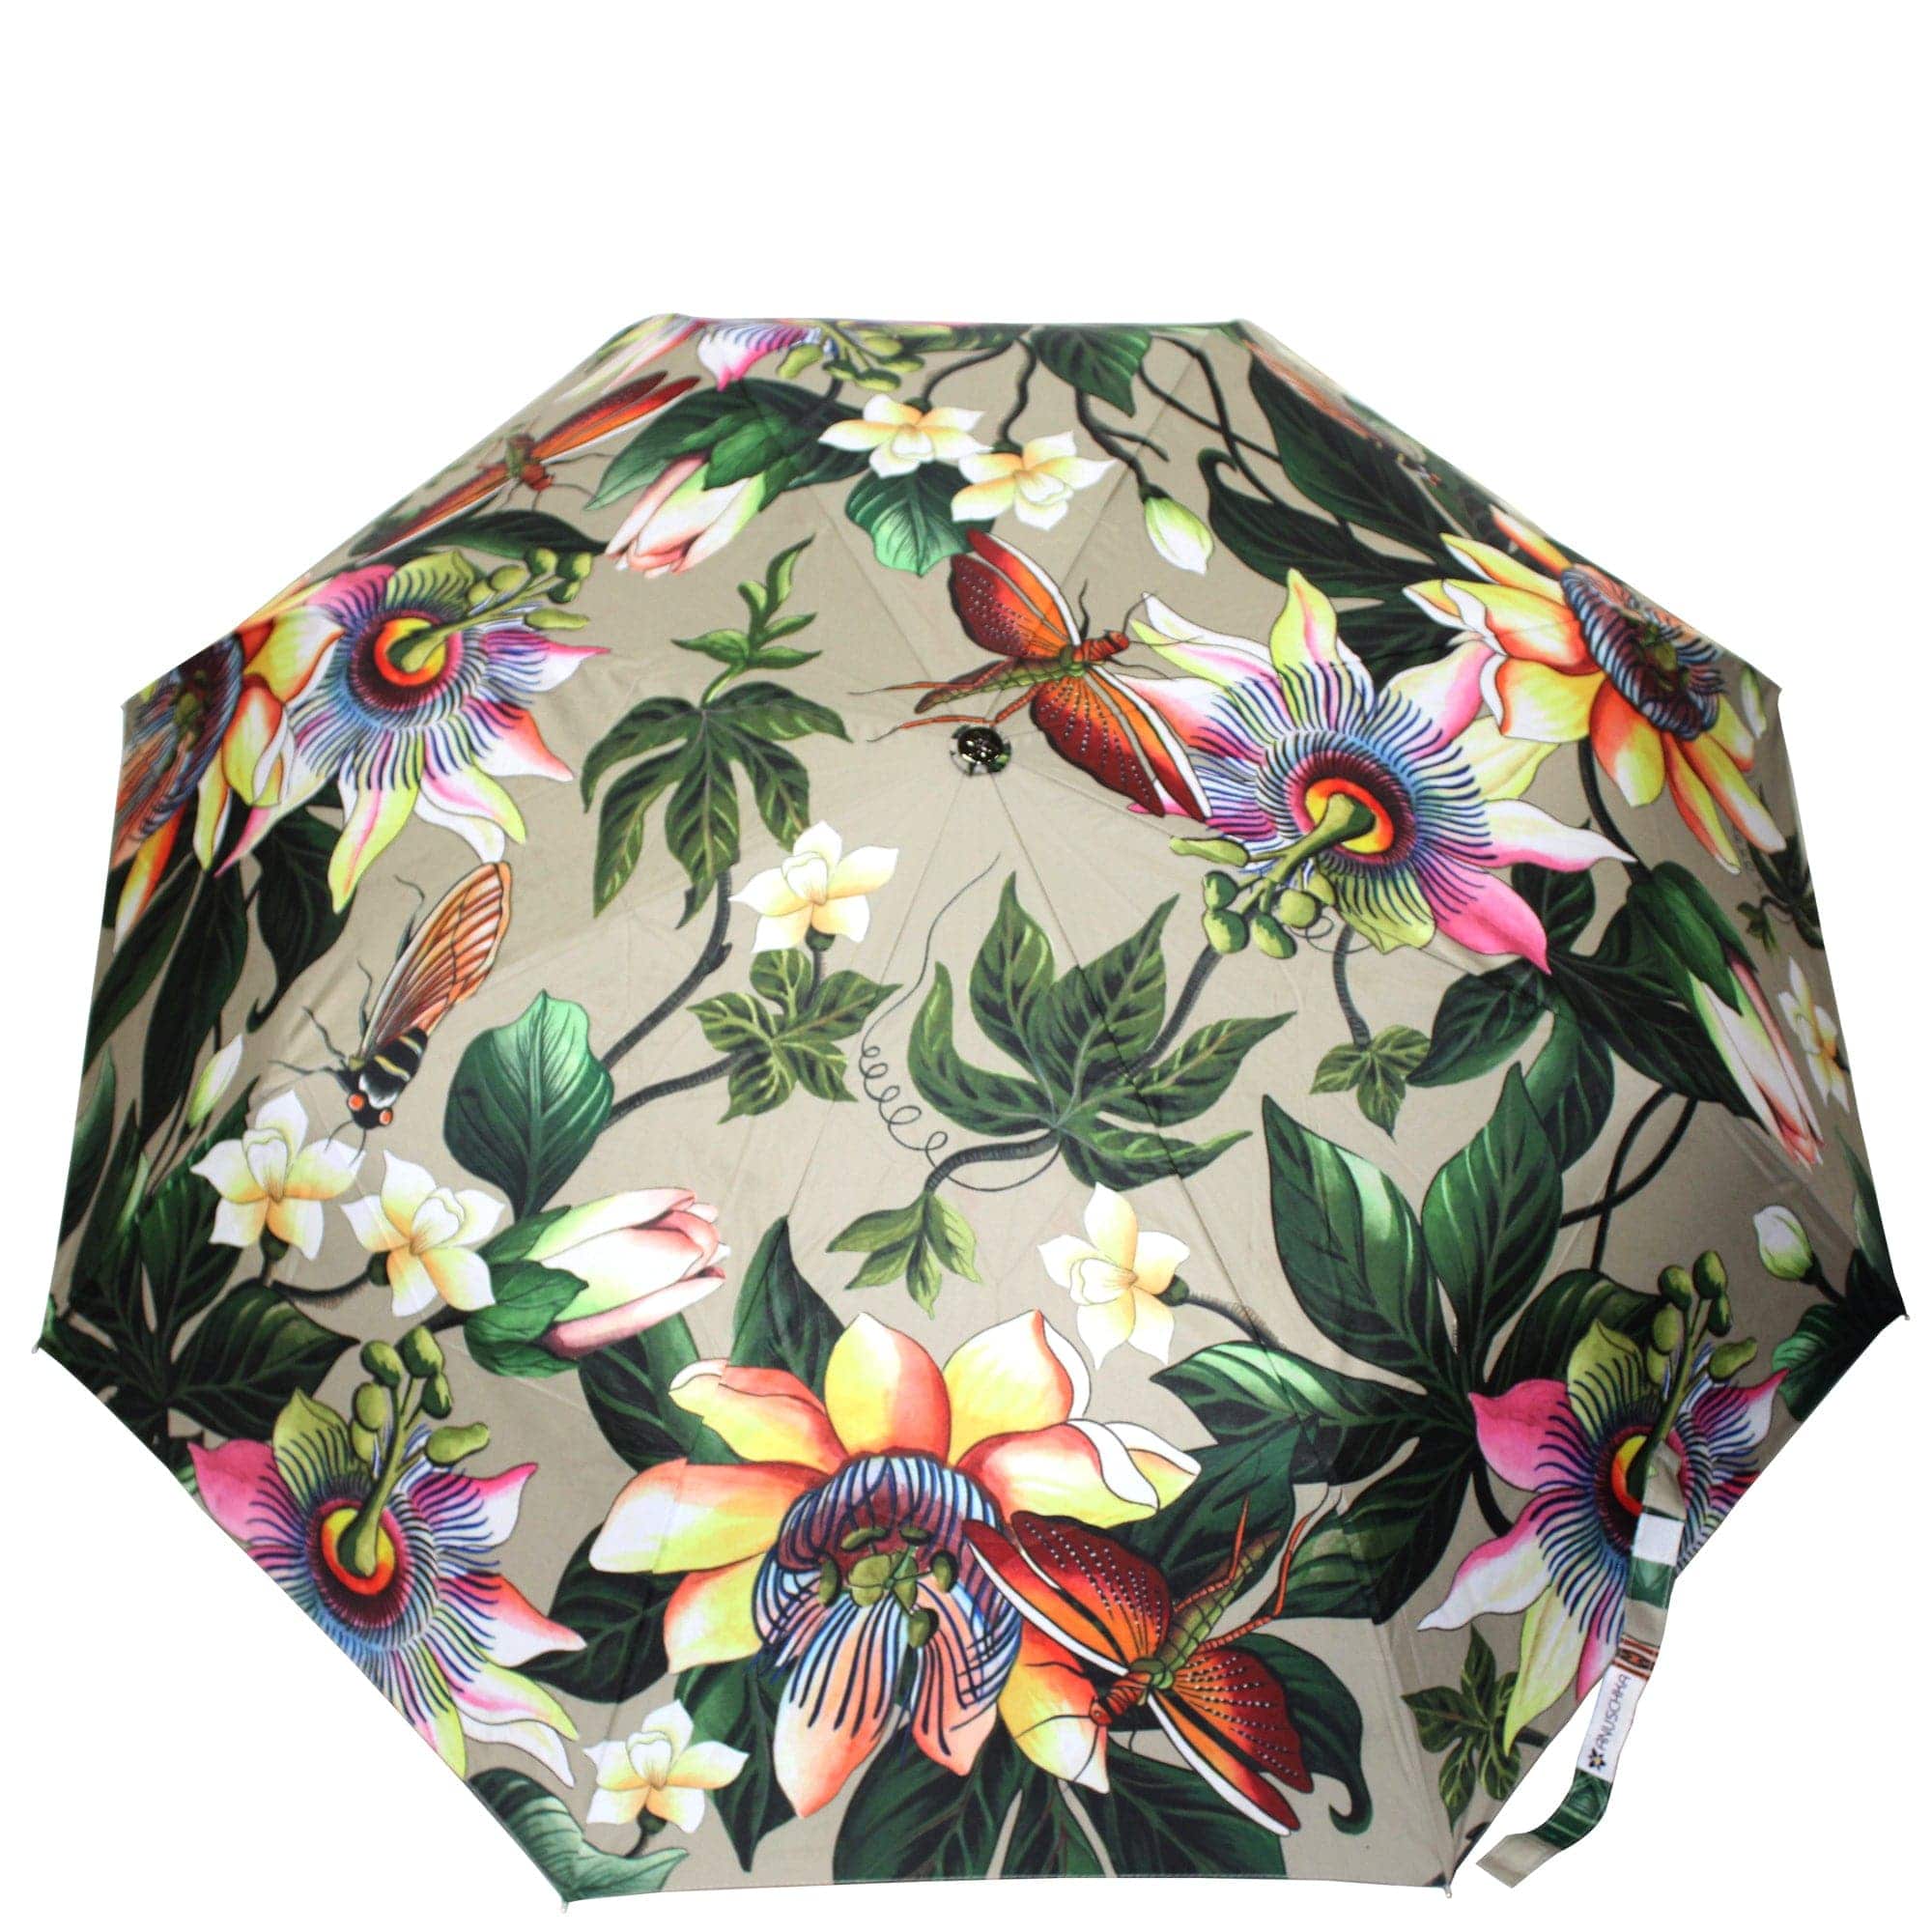 Floral umbrella StephieAnn summer accessories